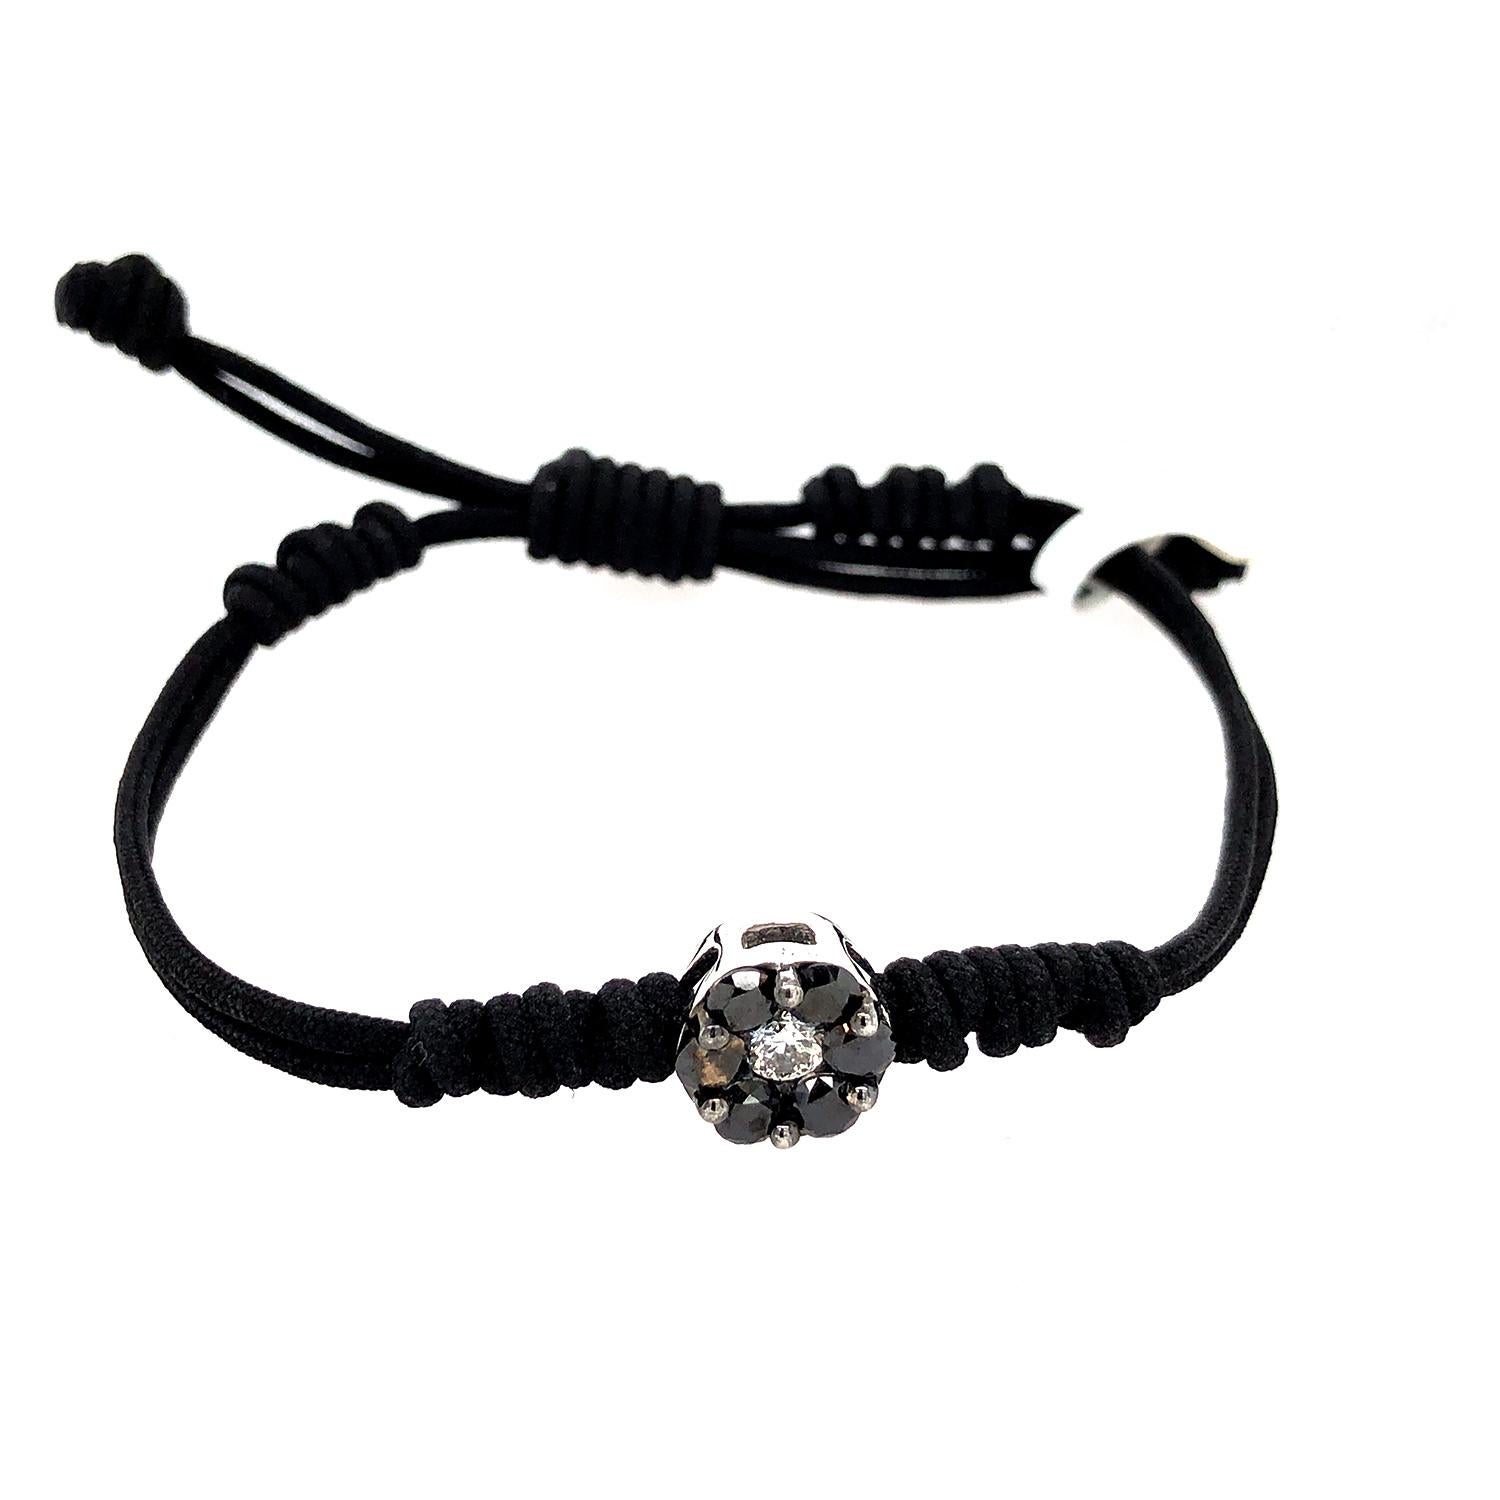 Women's Handmade Macrame Adjustable Bracelet With Rose Cut Black Diamonds Charm For Sale